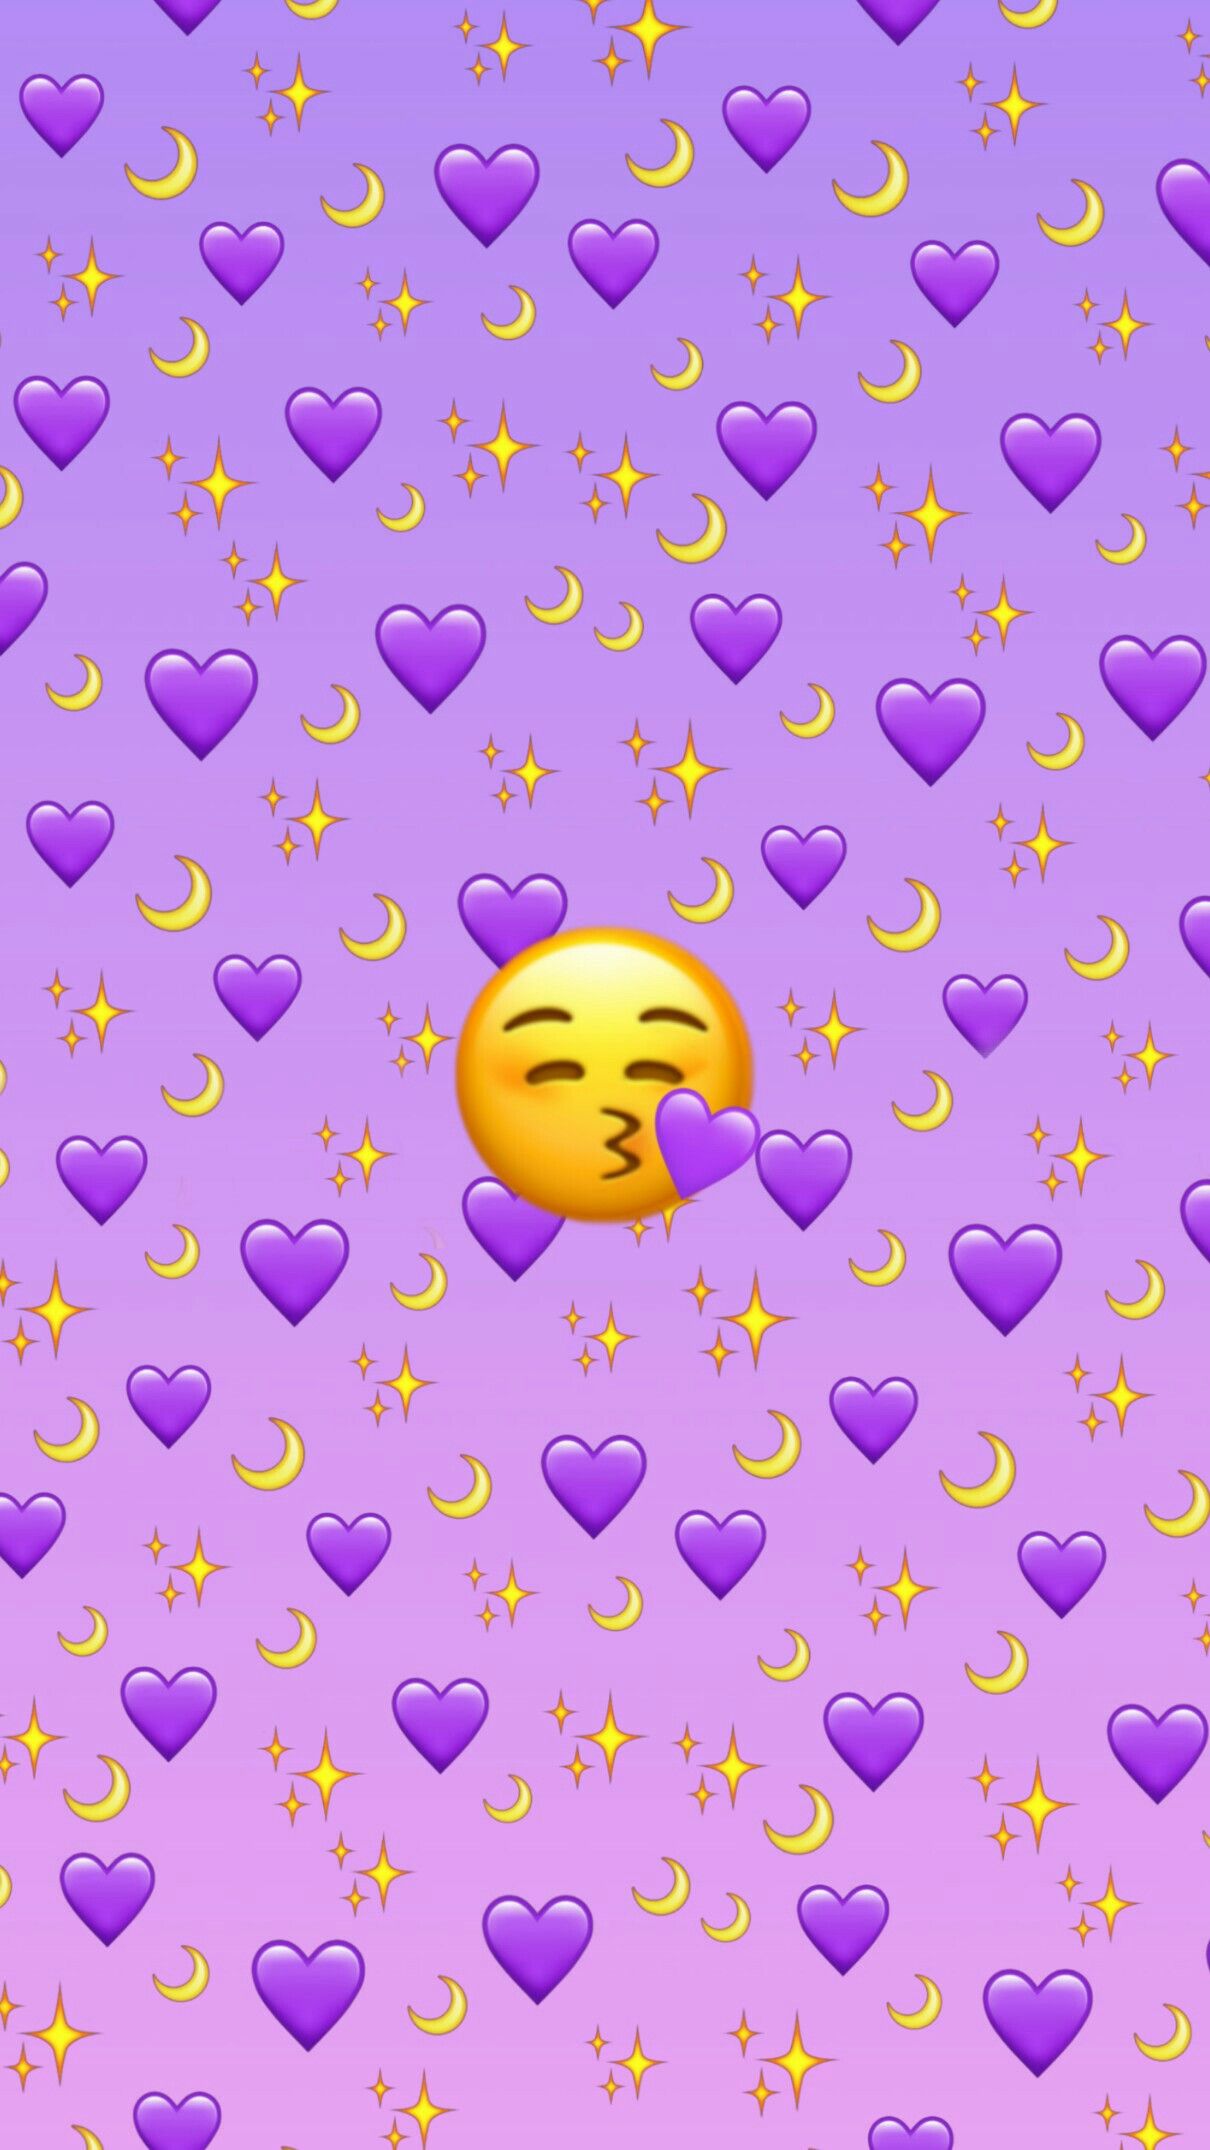 emoji backgrounds